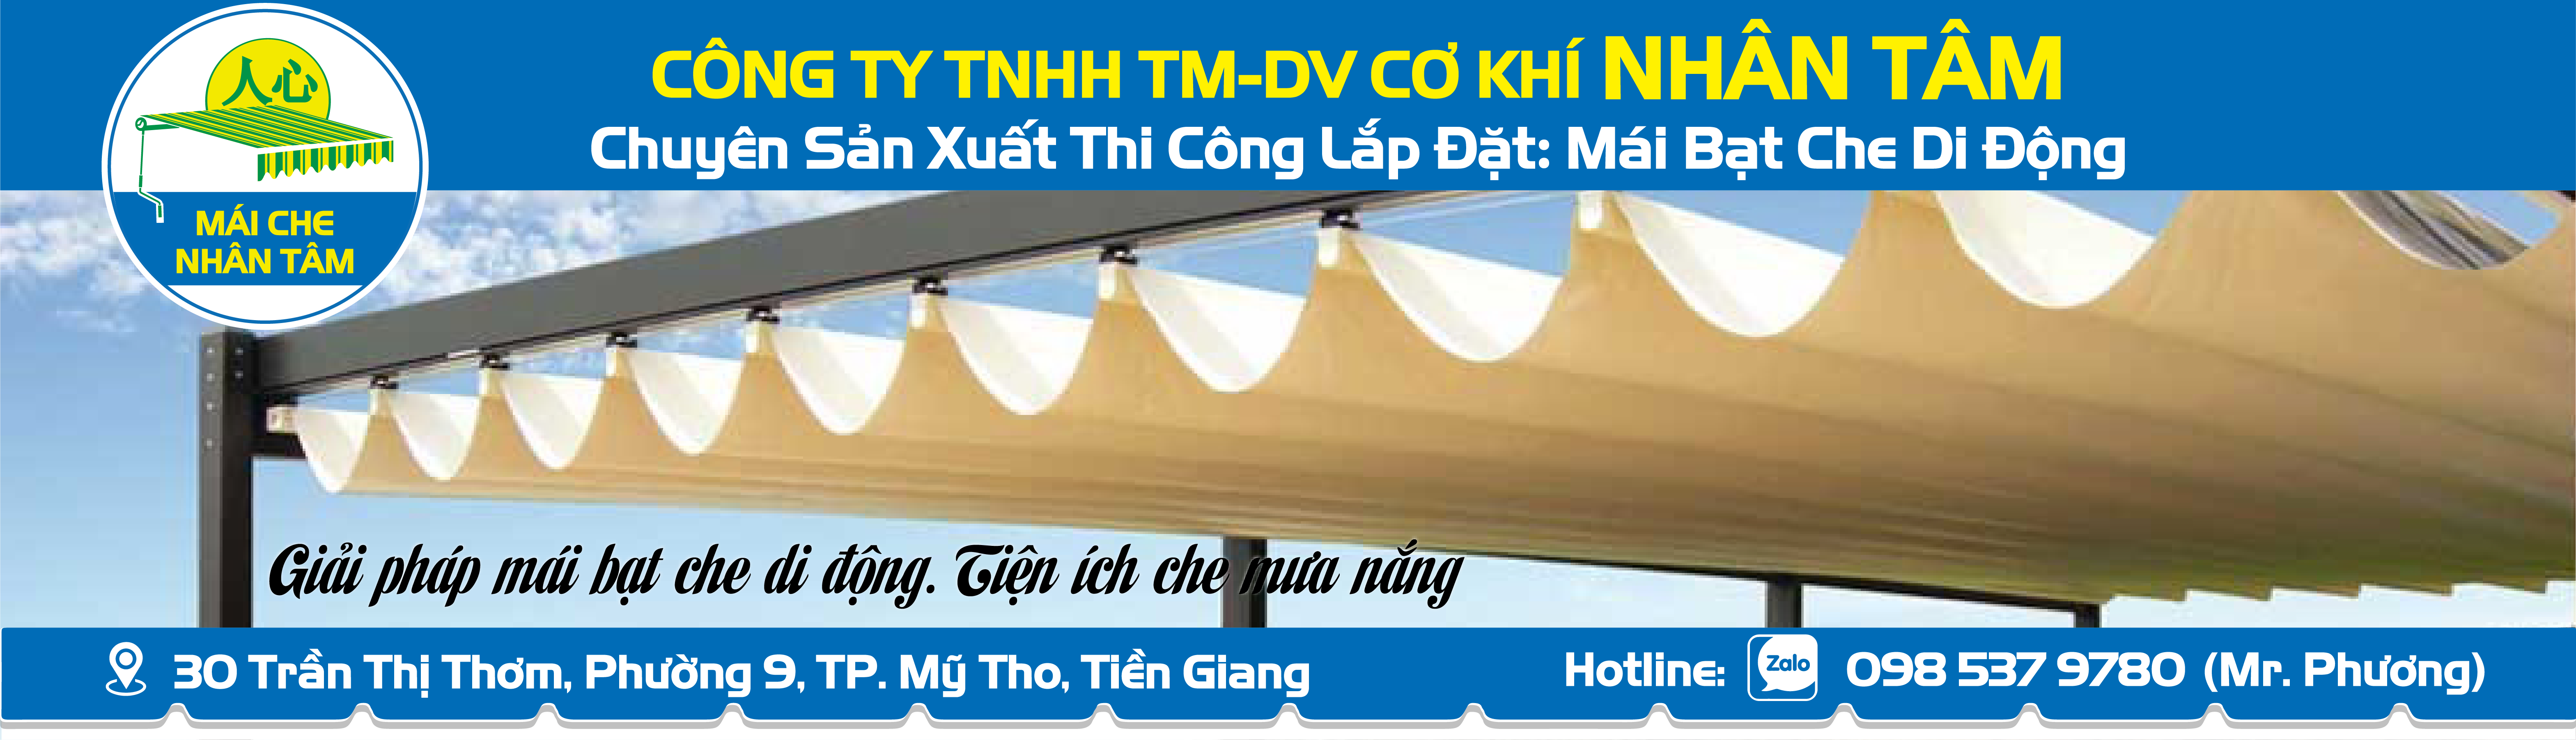 Mái che Tiền Giang